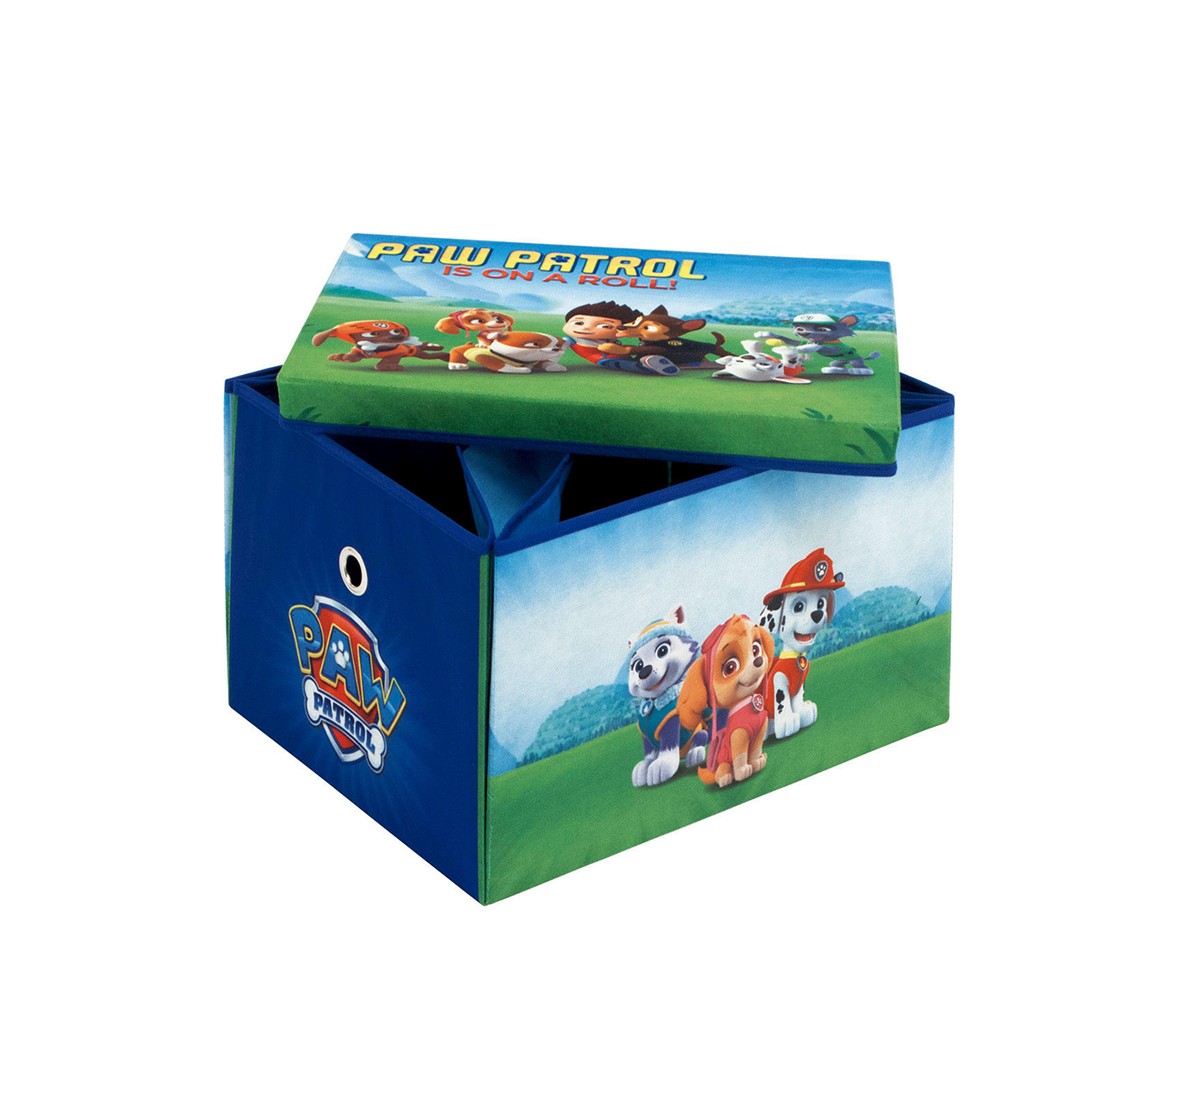 Paw Patrol Fabric Storage Box With Playmat Room Furnishing for Kids age 3Y+ 